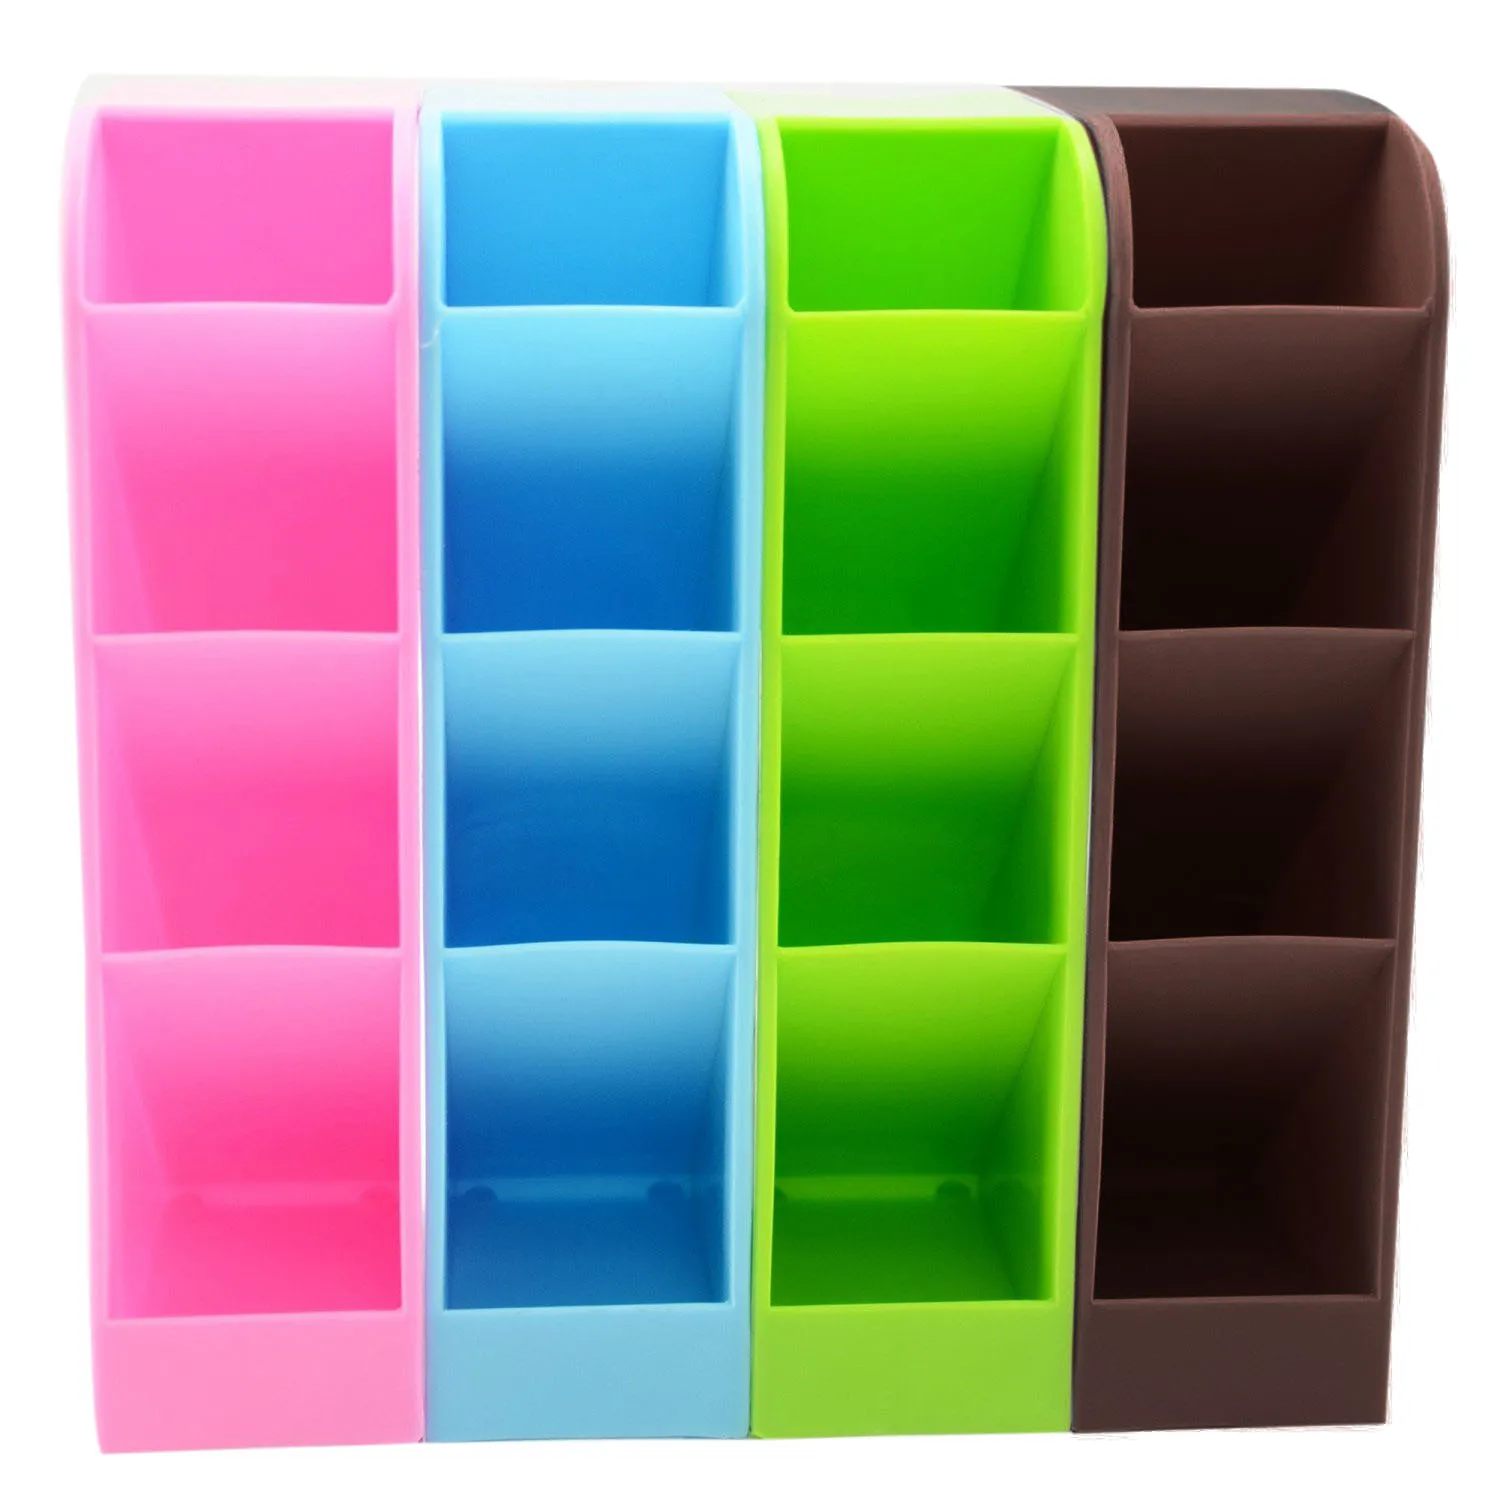 PPYY NEW -Multifunction Four Grid Desktop Storage Organizer Box for Office stationery Pen Socks Make up Tools(set of 4) | Канцтовары для